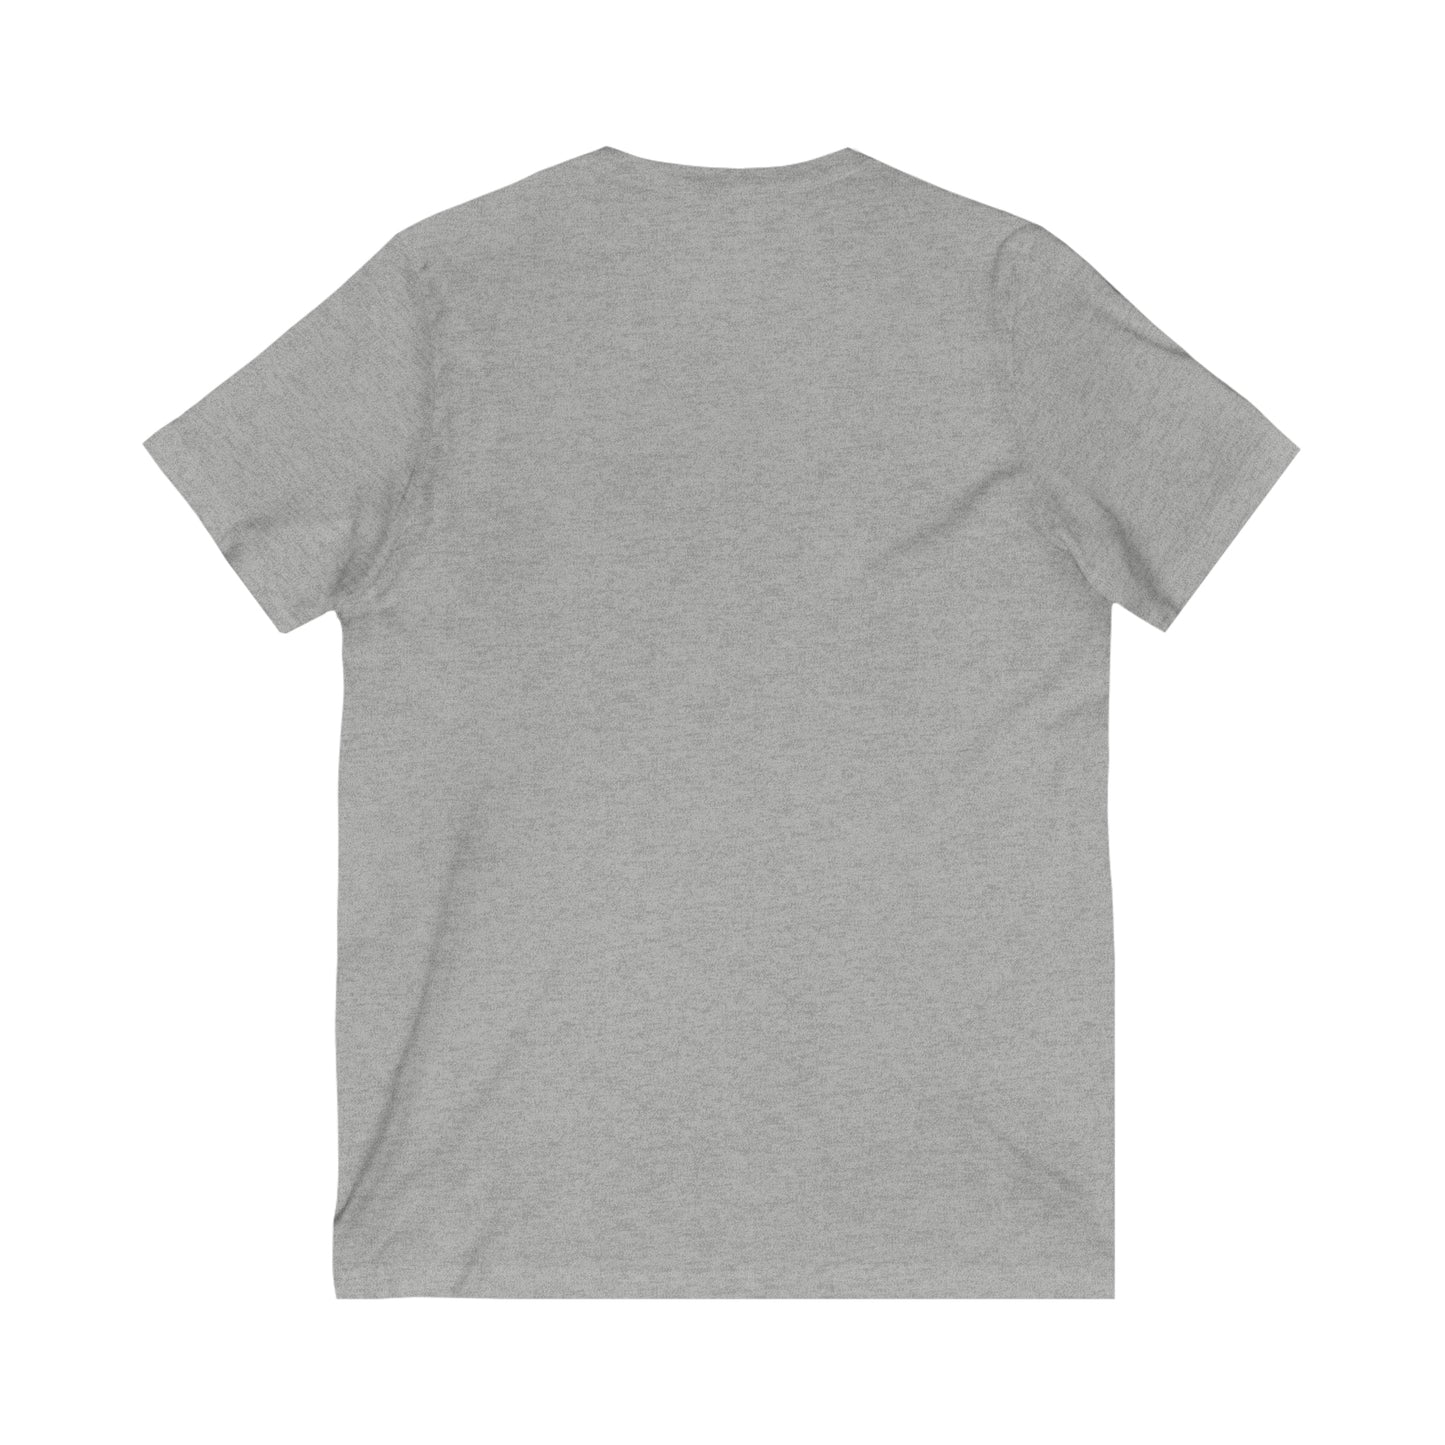 Ladies V-Neck T-Shirt - Inward Peace - A Thousand Elsewhere